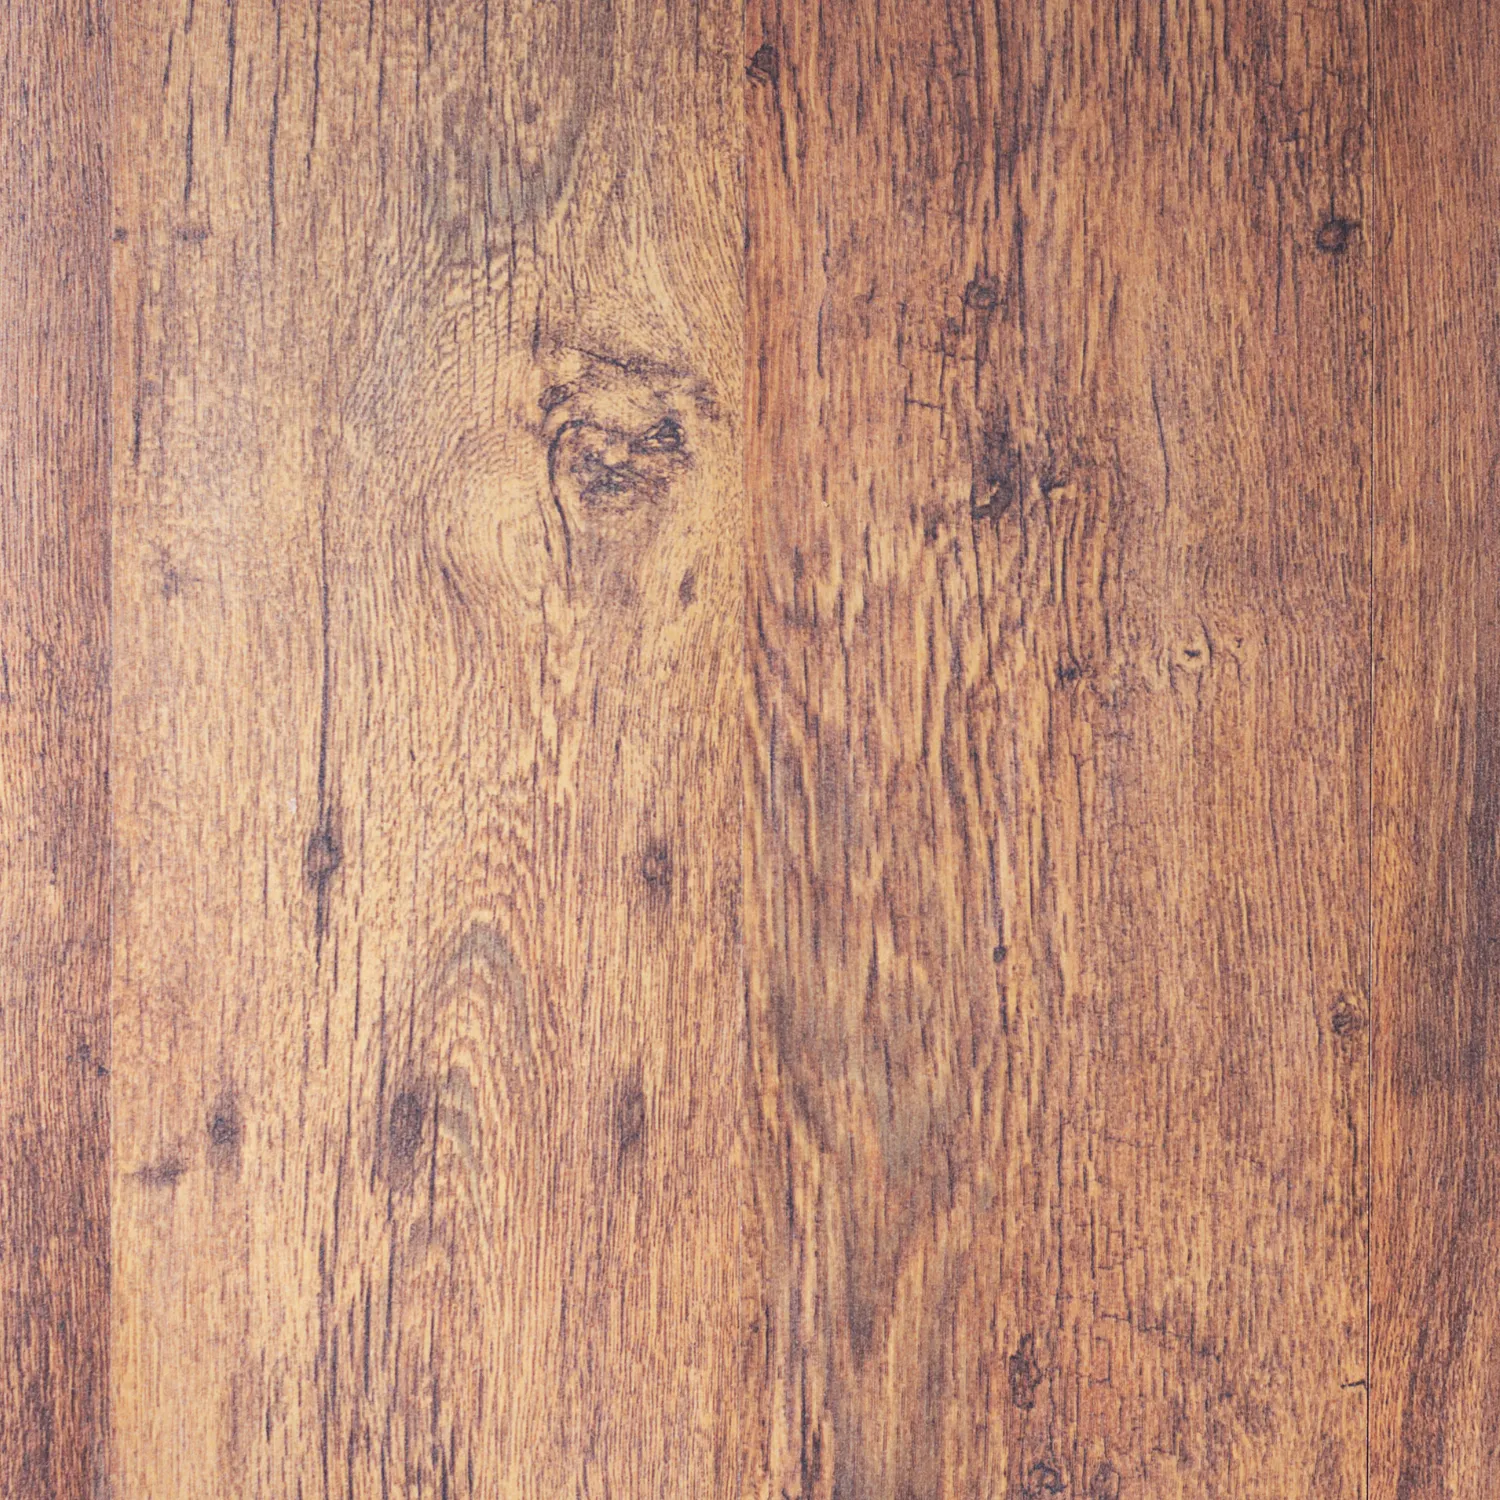 brown plywood flooring material